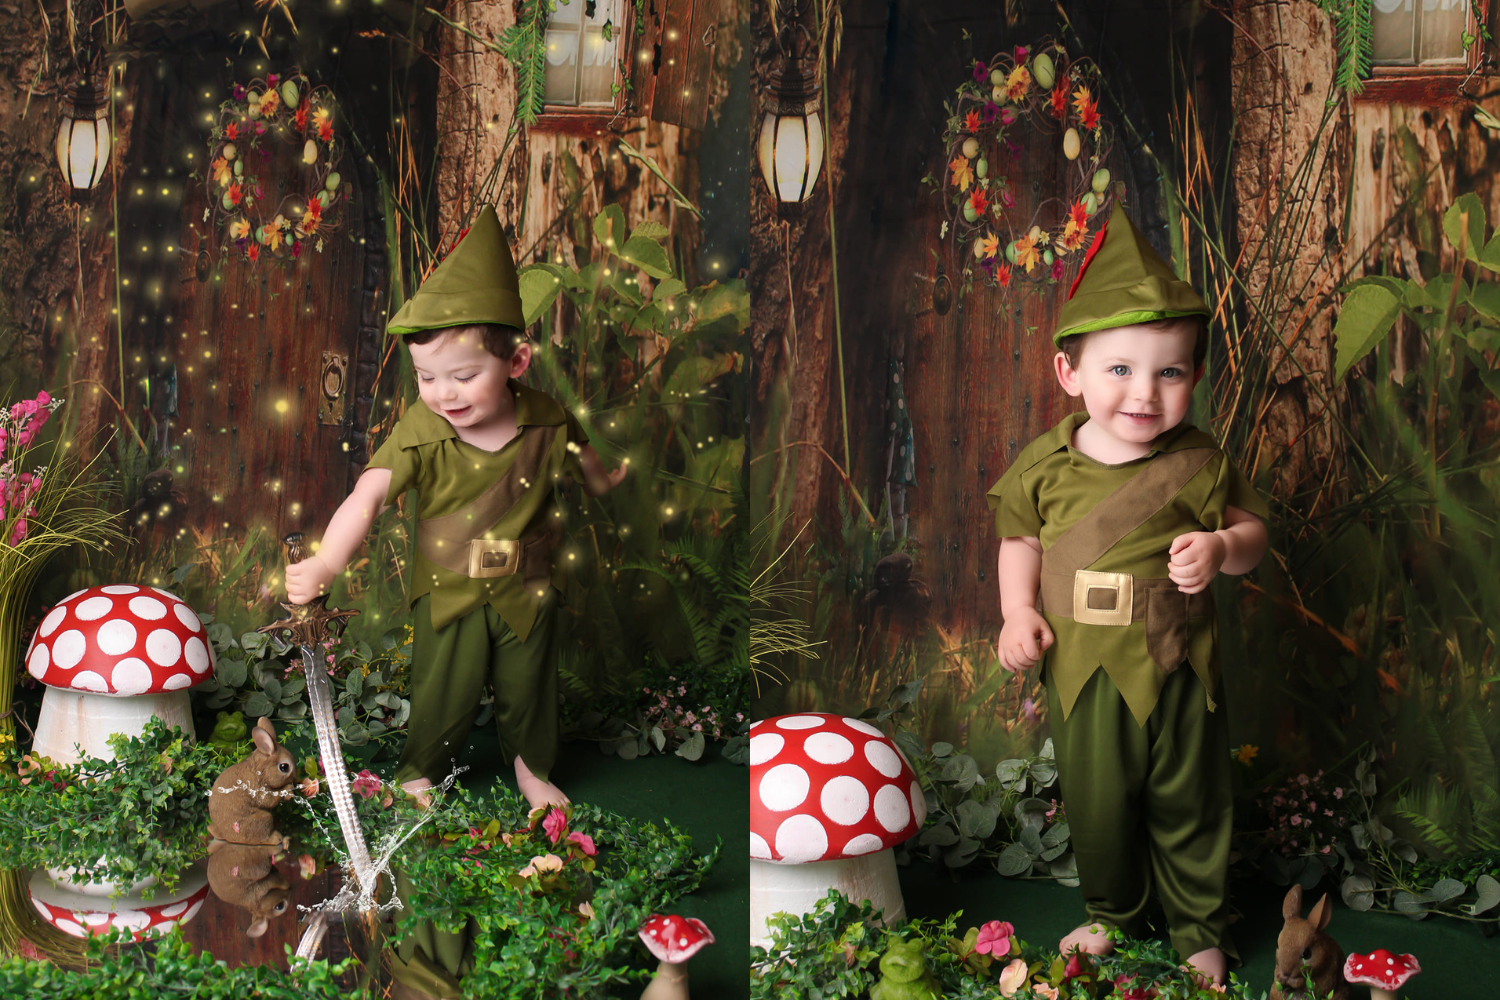 little boy's play in garden with elf costume